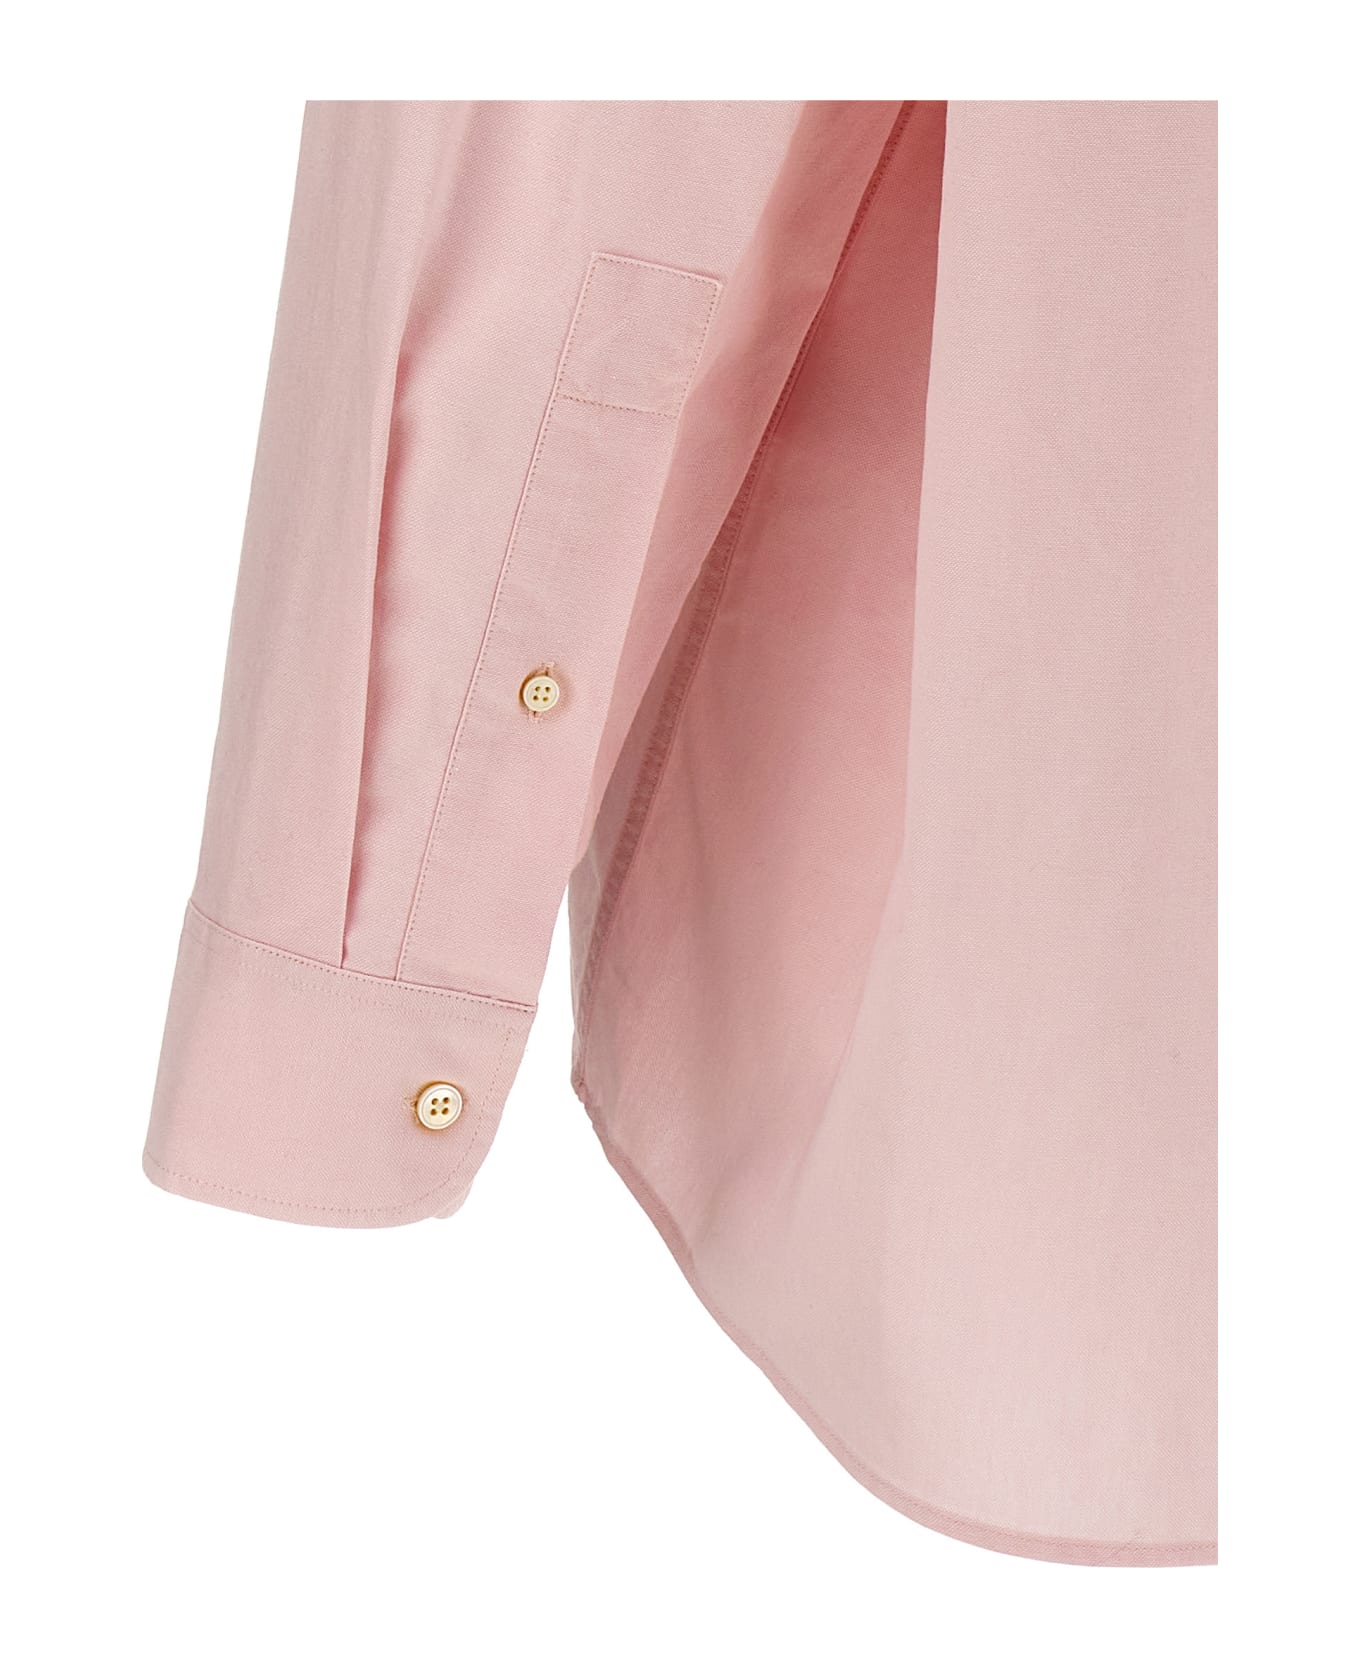 Studio Nicholson Oversize Shirt - Pink